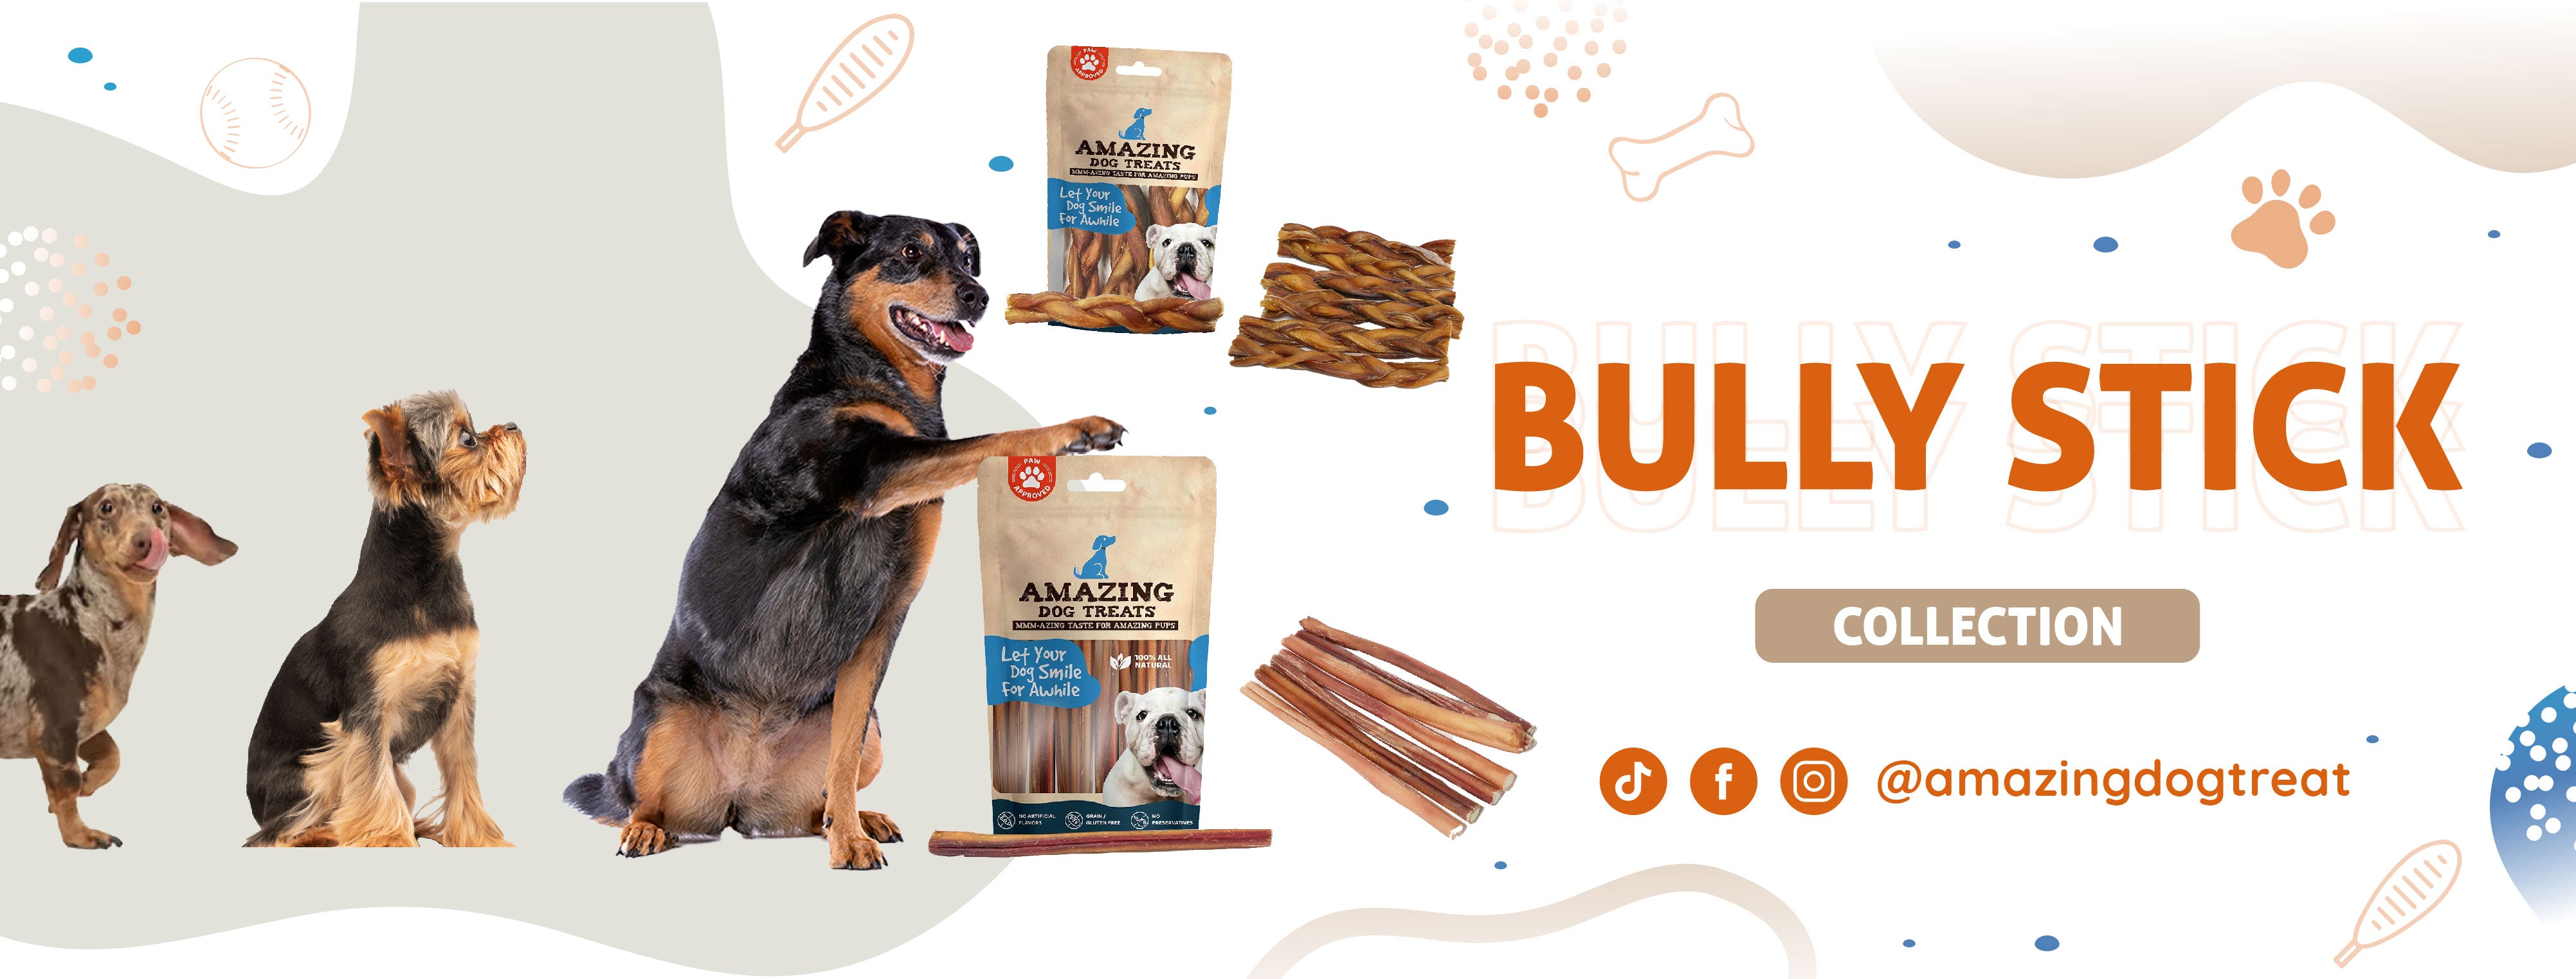 Amazing Dog Treats - Bully Sticks 6 inch Regular Size 40 PcsPack - Premium Bully Stick Dog Chews - Long Lasting Bully Sticks for Dogs - Best Bully